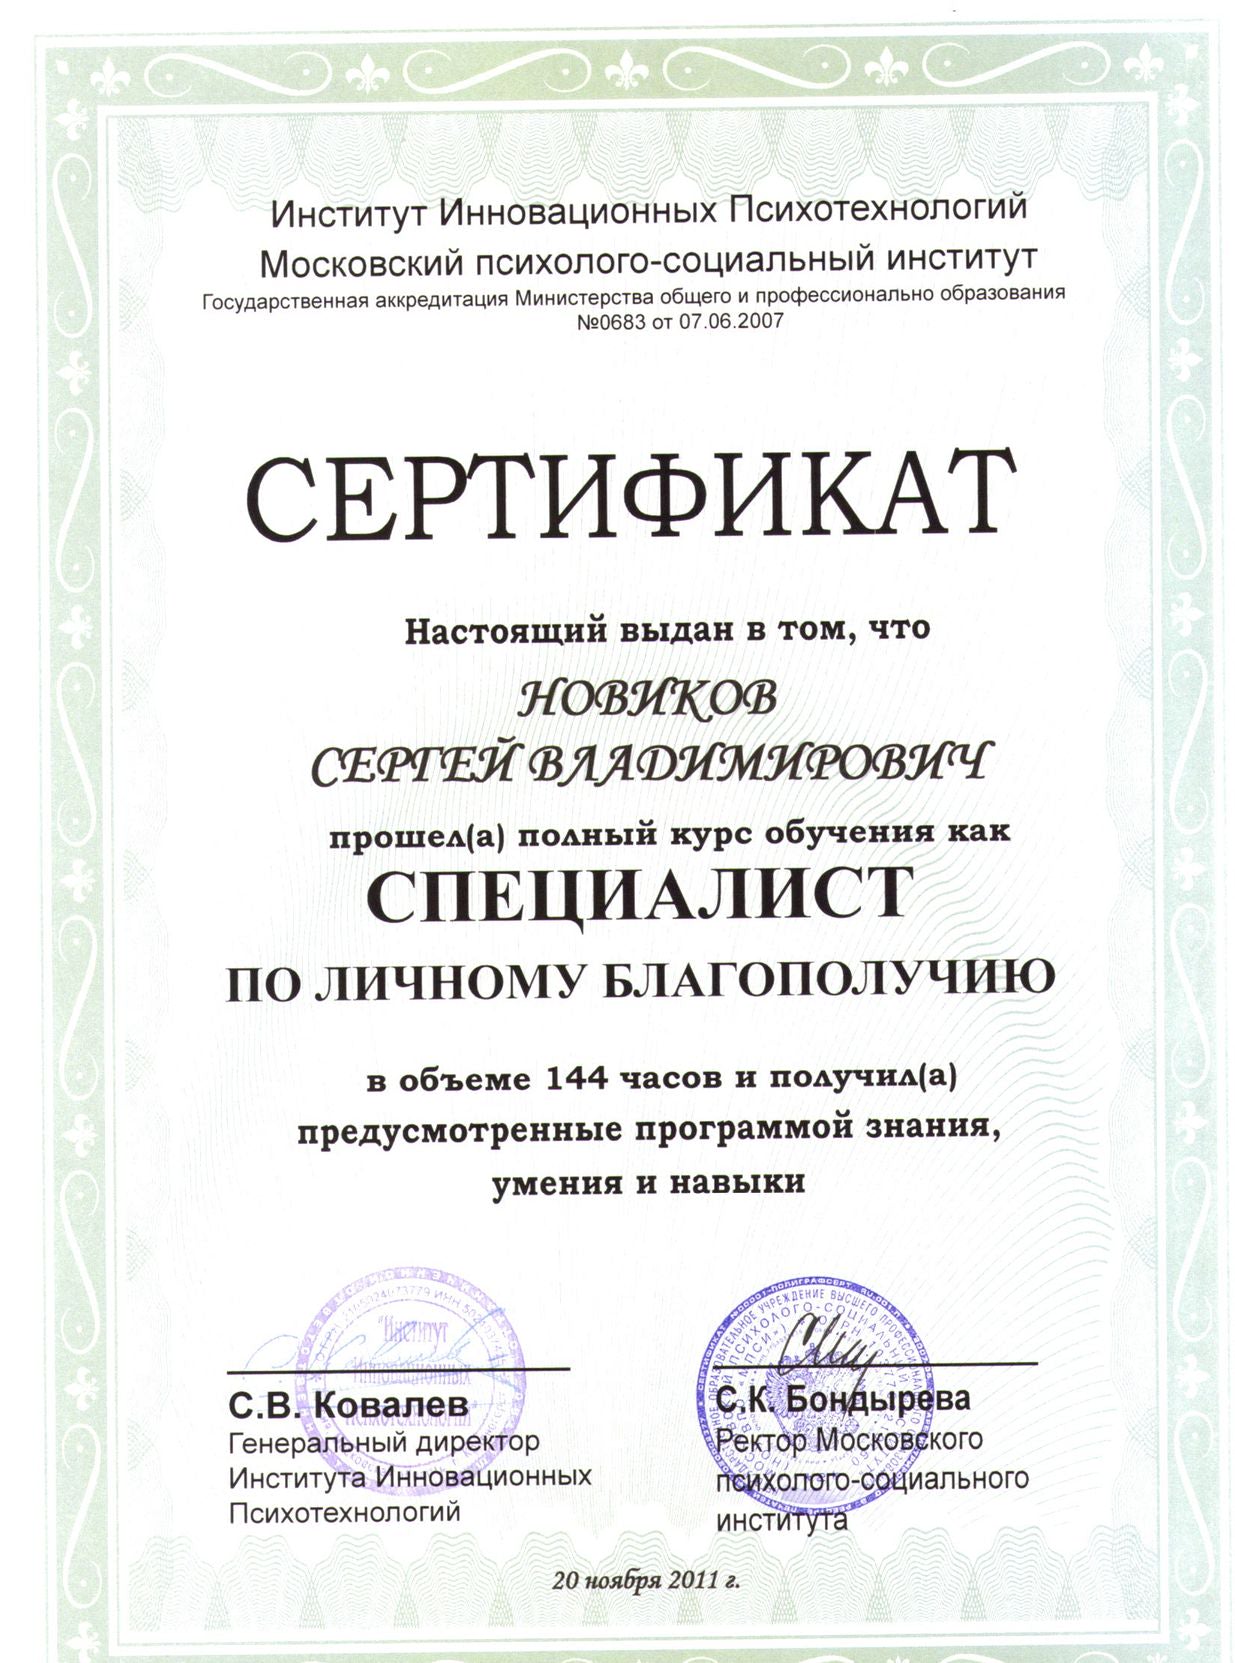 Сертификат Специалиста по личному благополучию